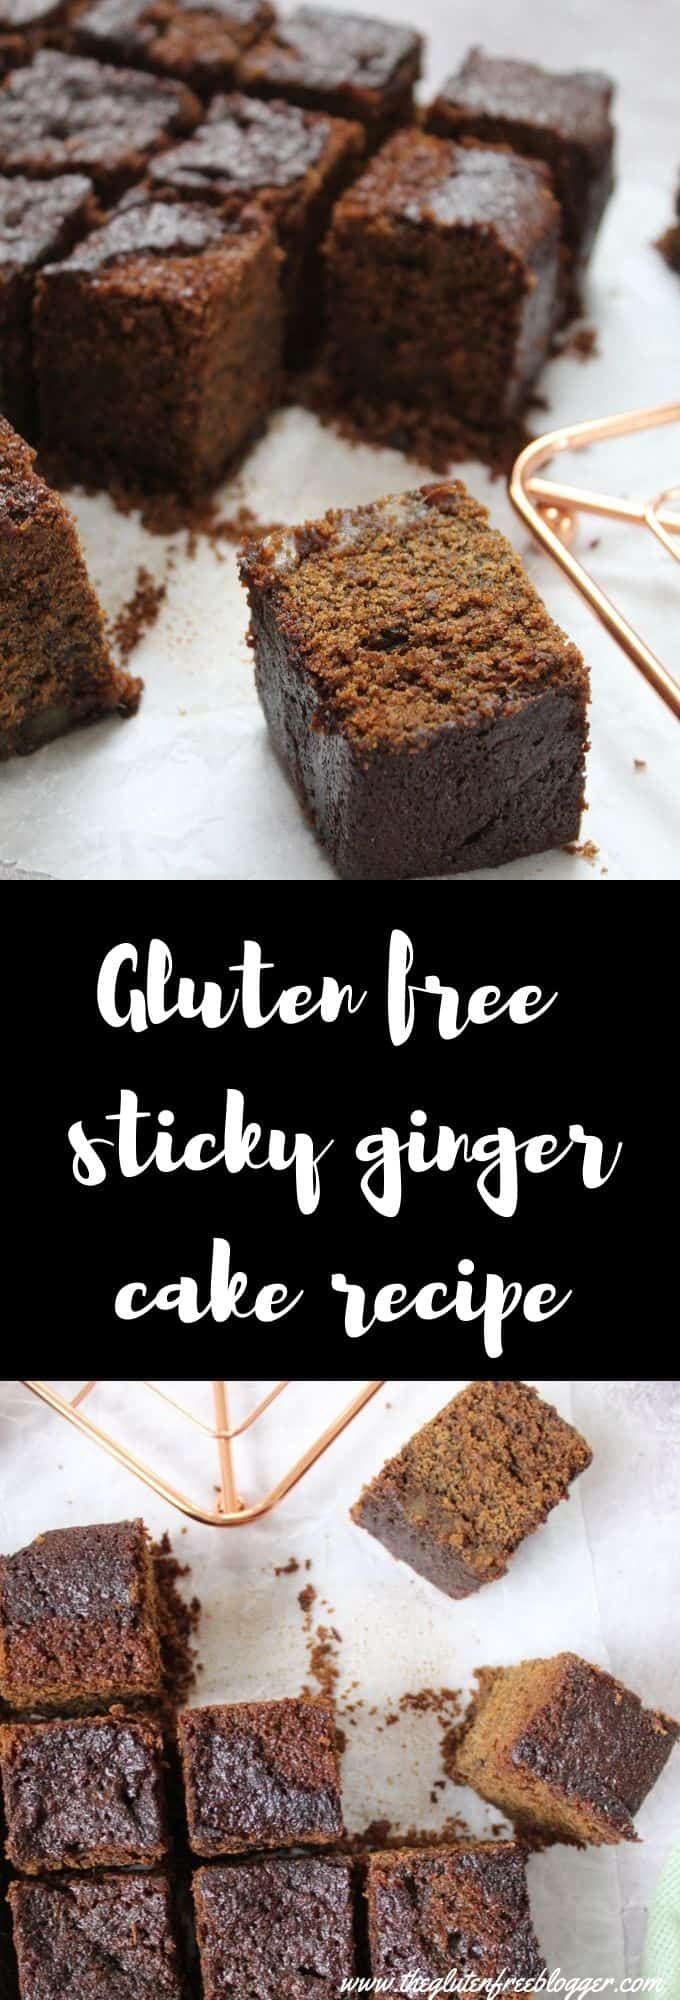 gluten free ginger cake recipe easy sticky gingerbread cake coeliac baking